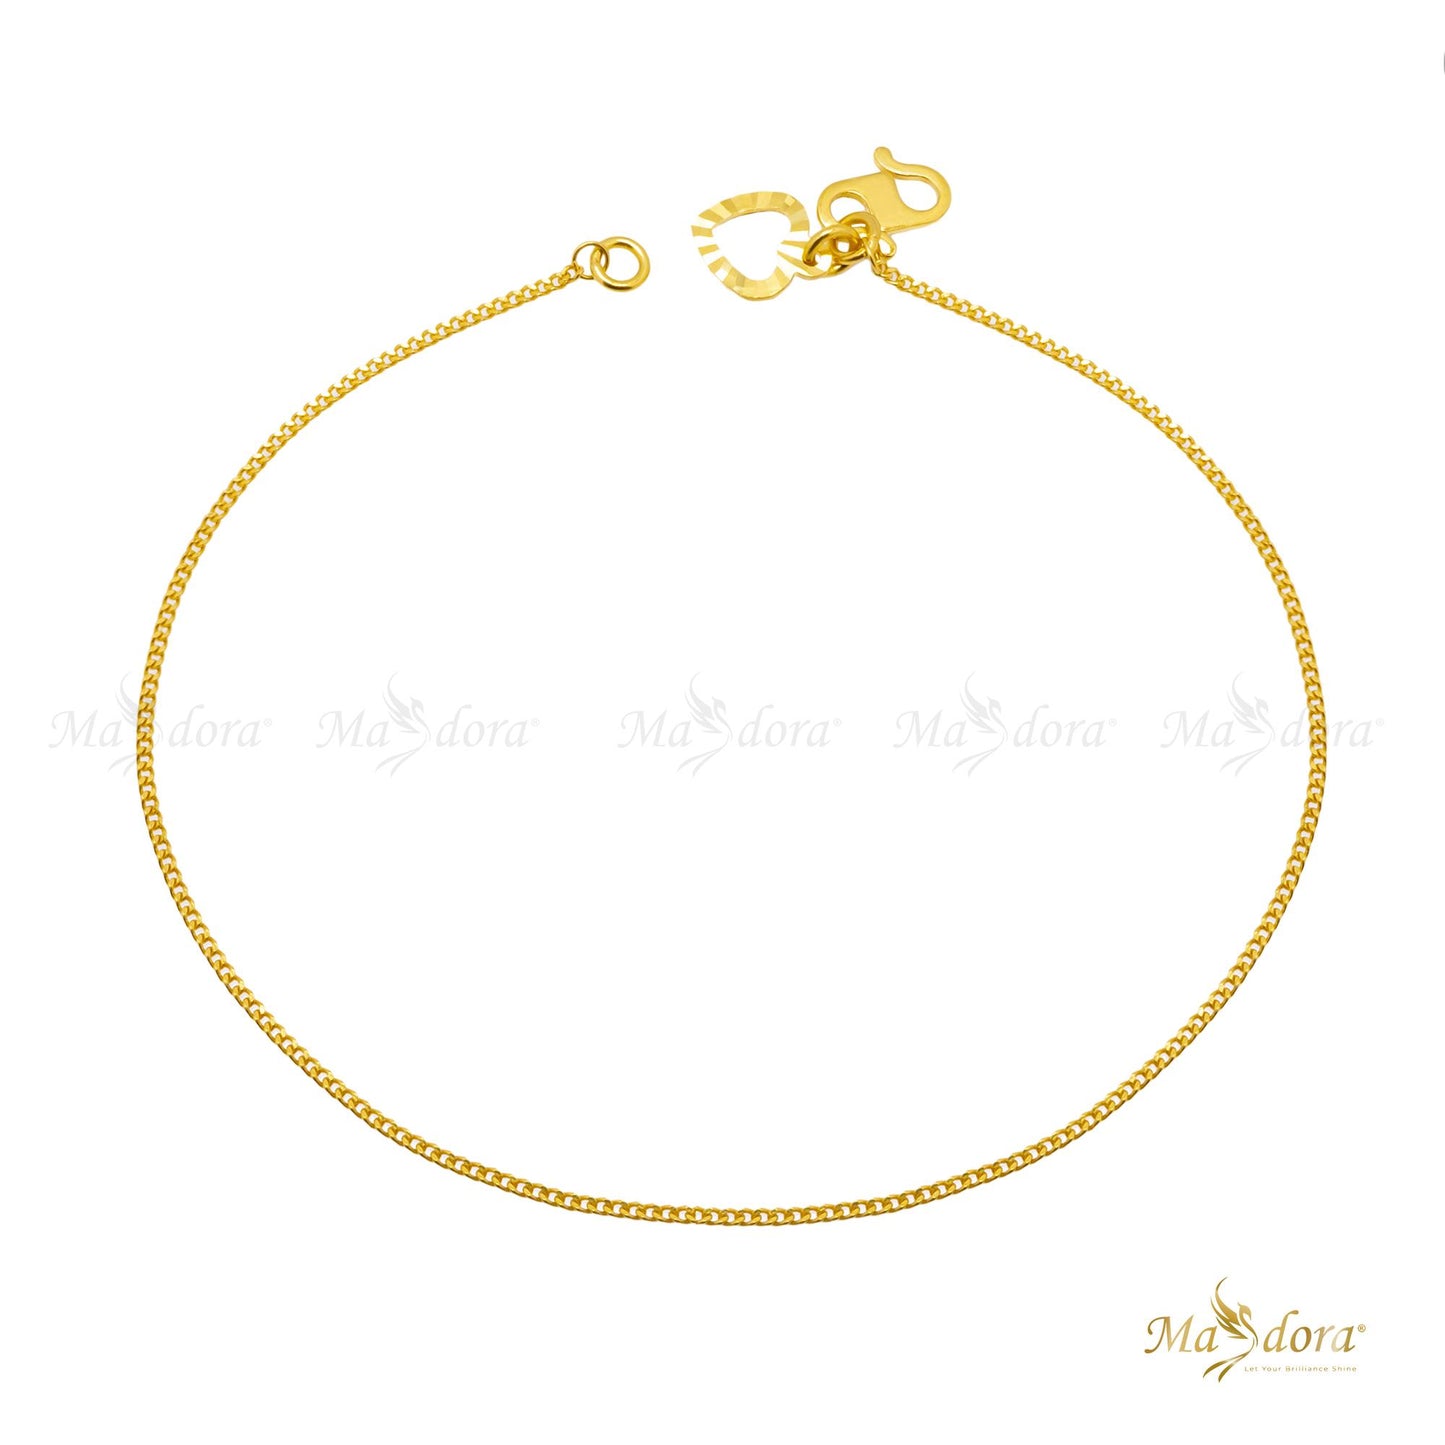 Masdora Curb Chain (with Love)